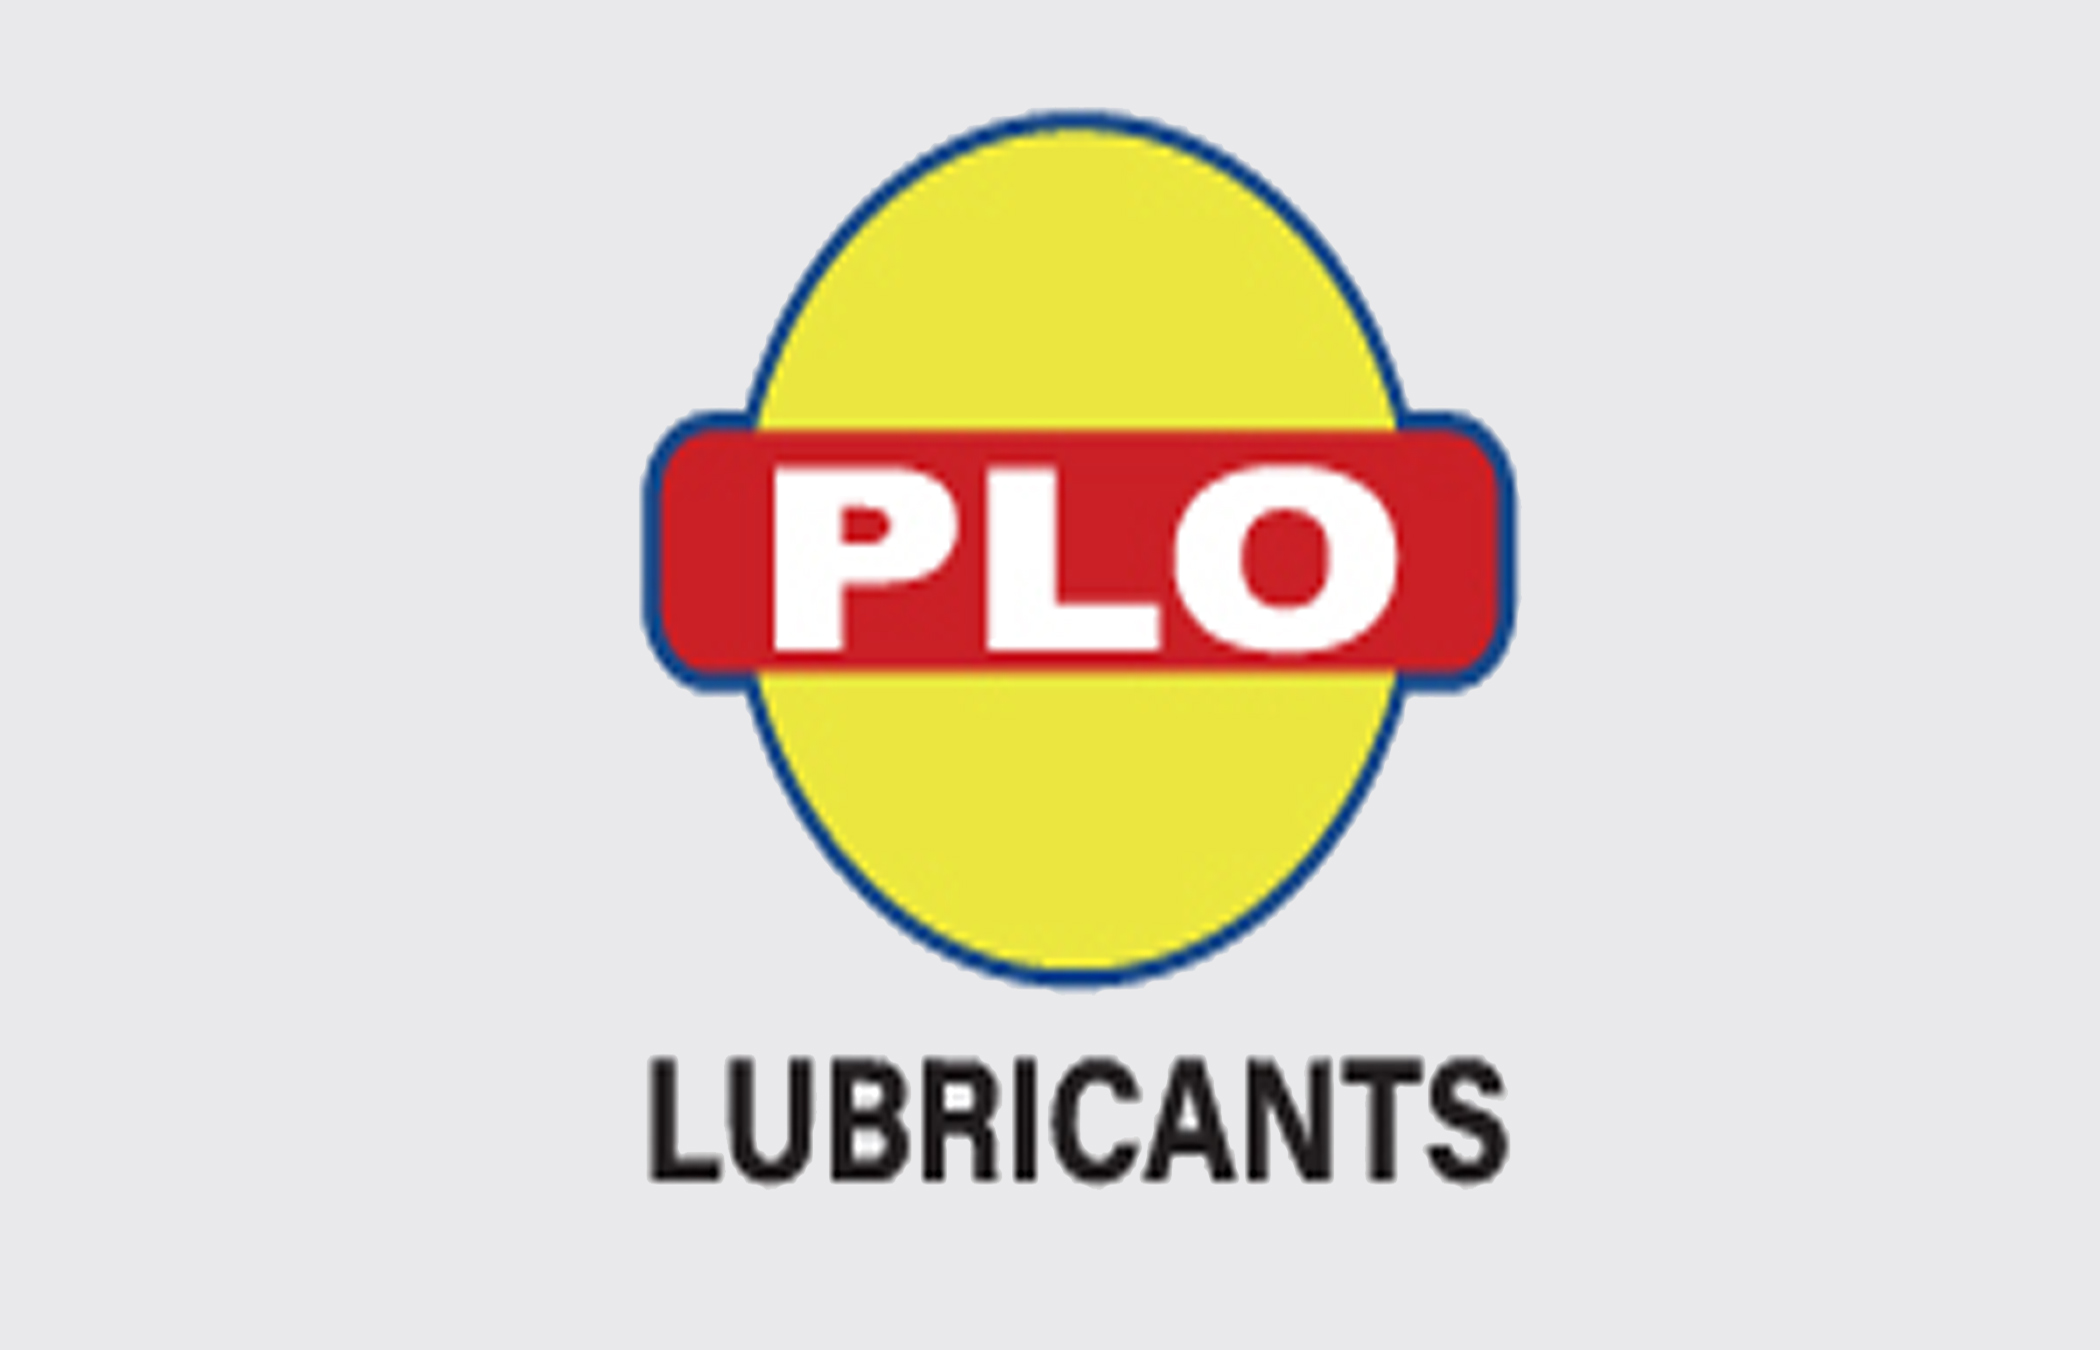 PLO lubricants